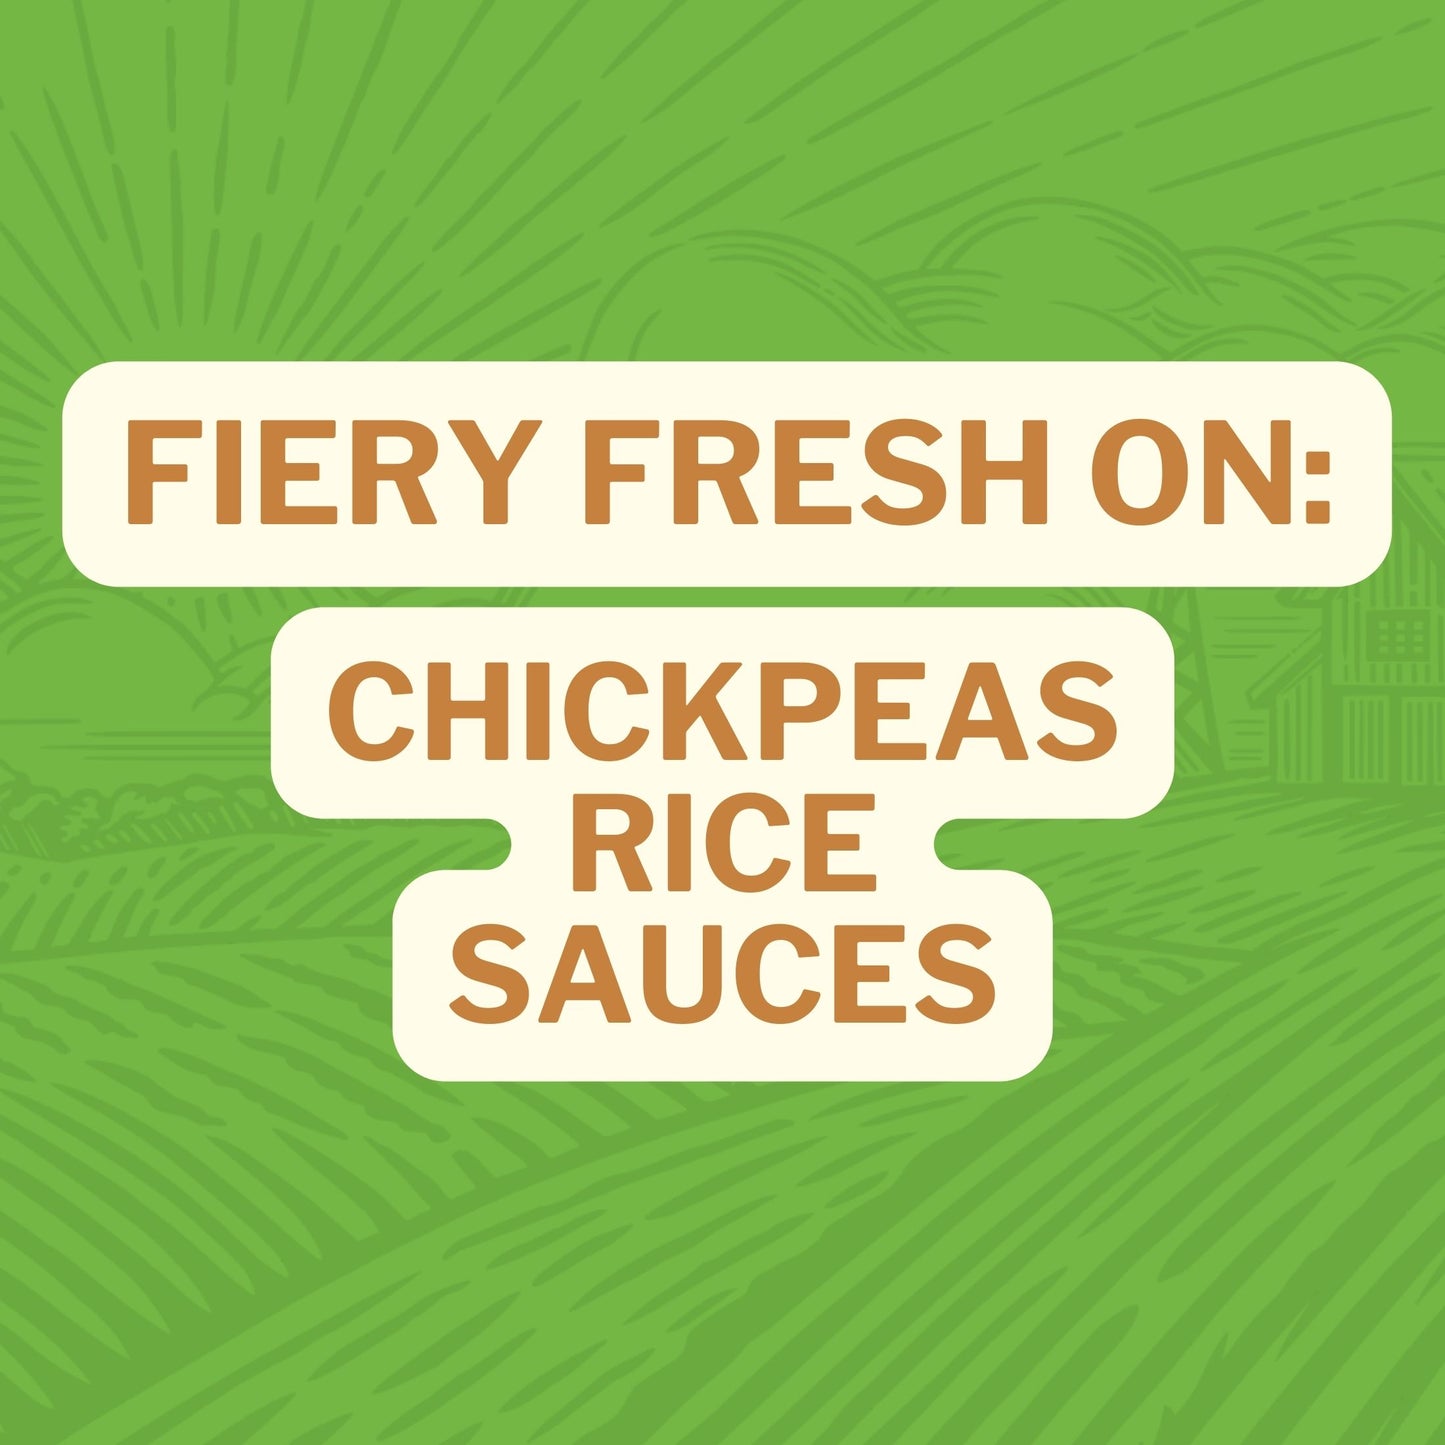 Fiery Fresh On: Chickpeas Rice Sauces 